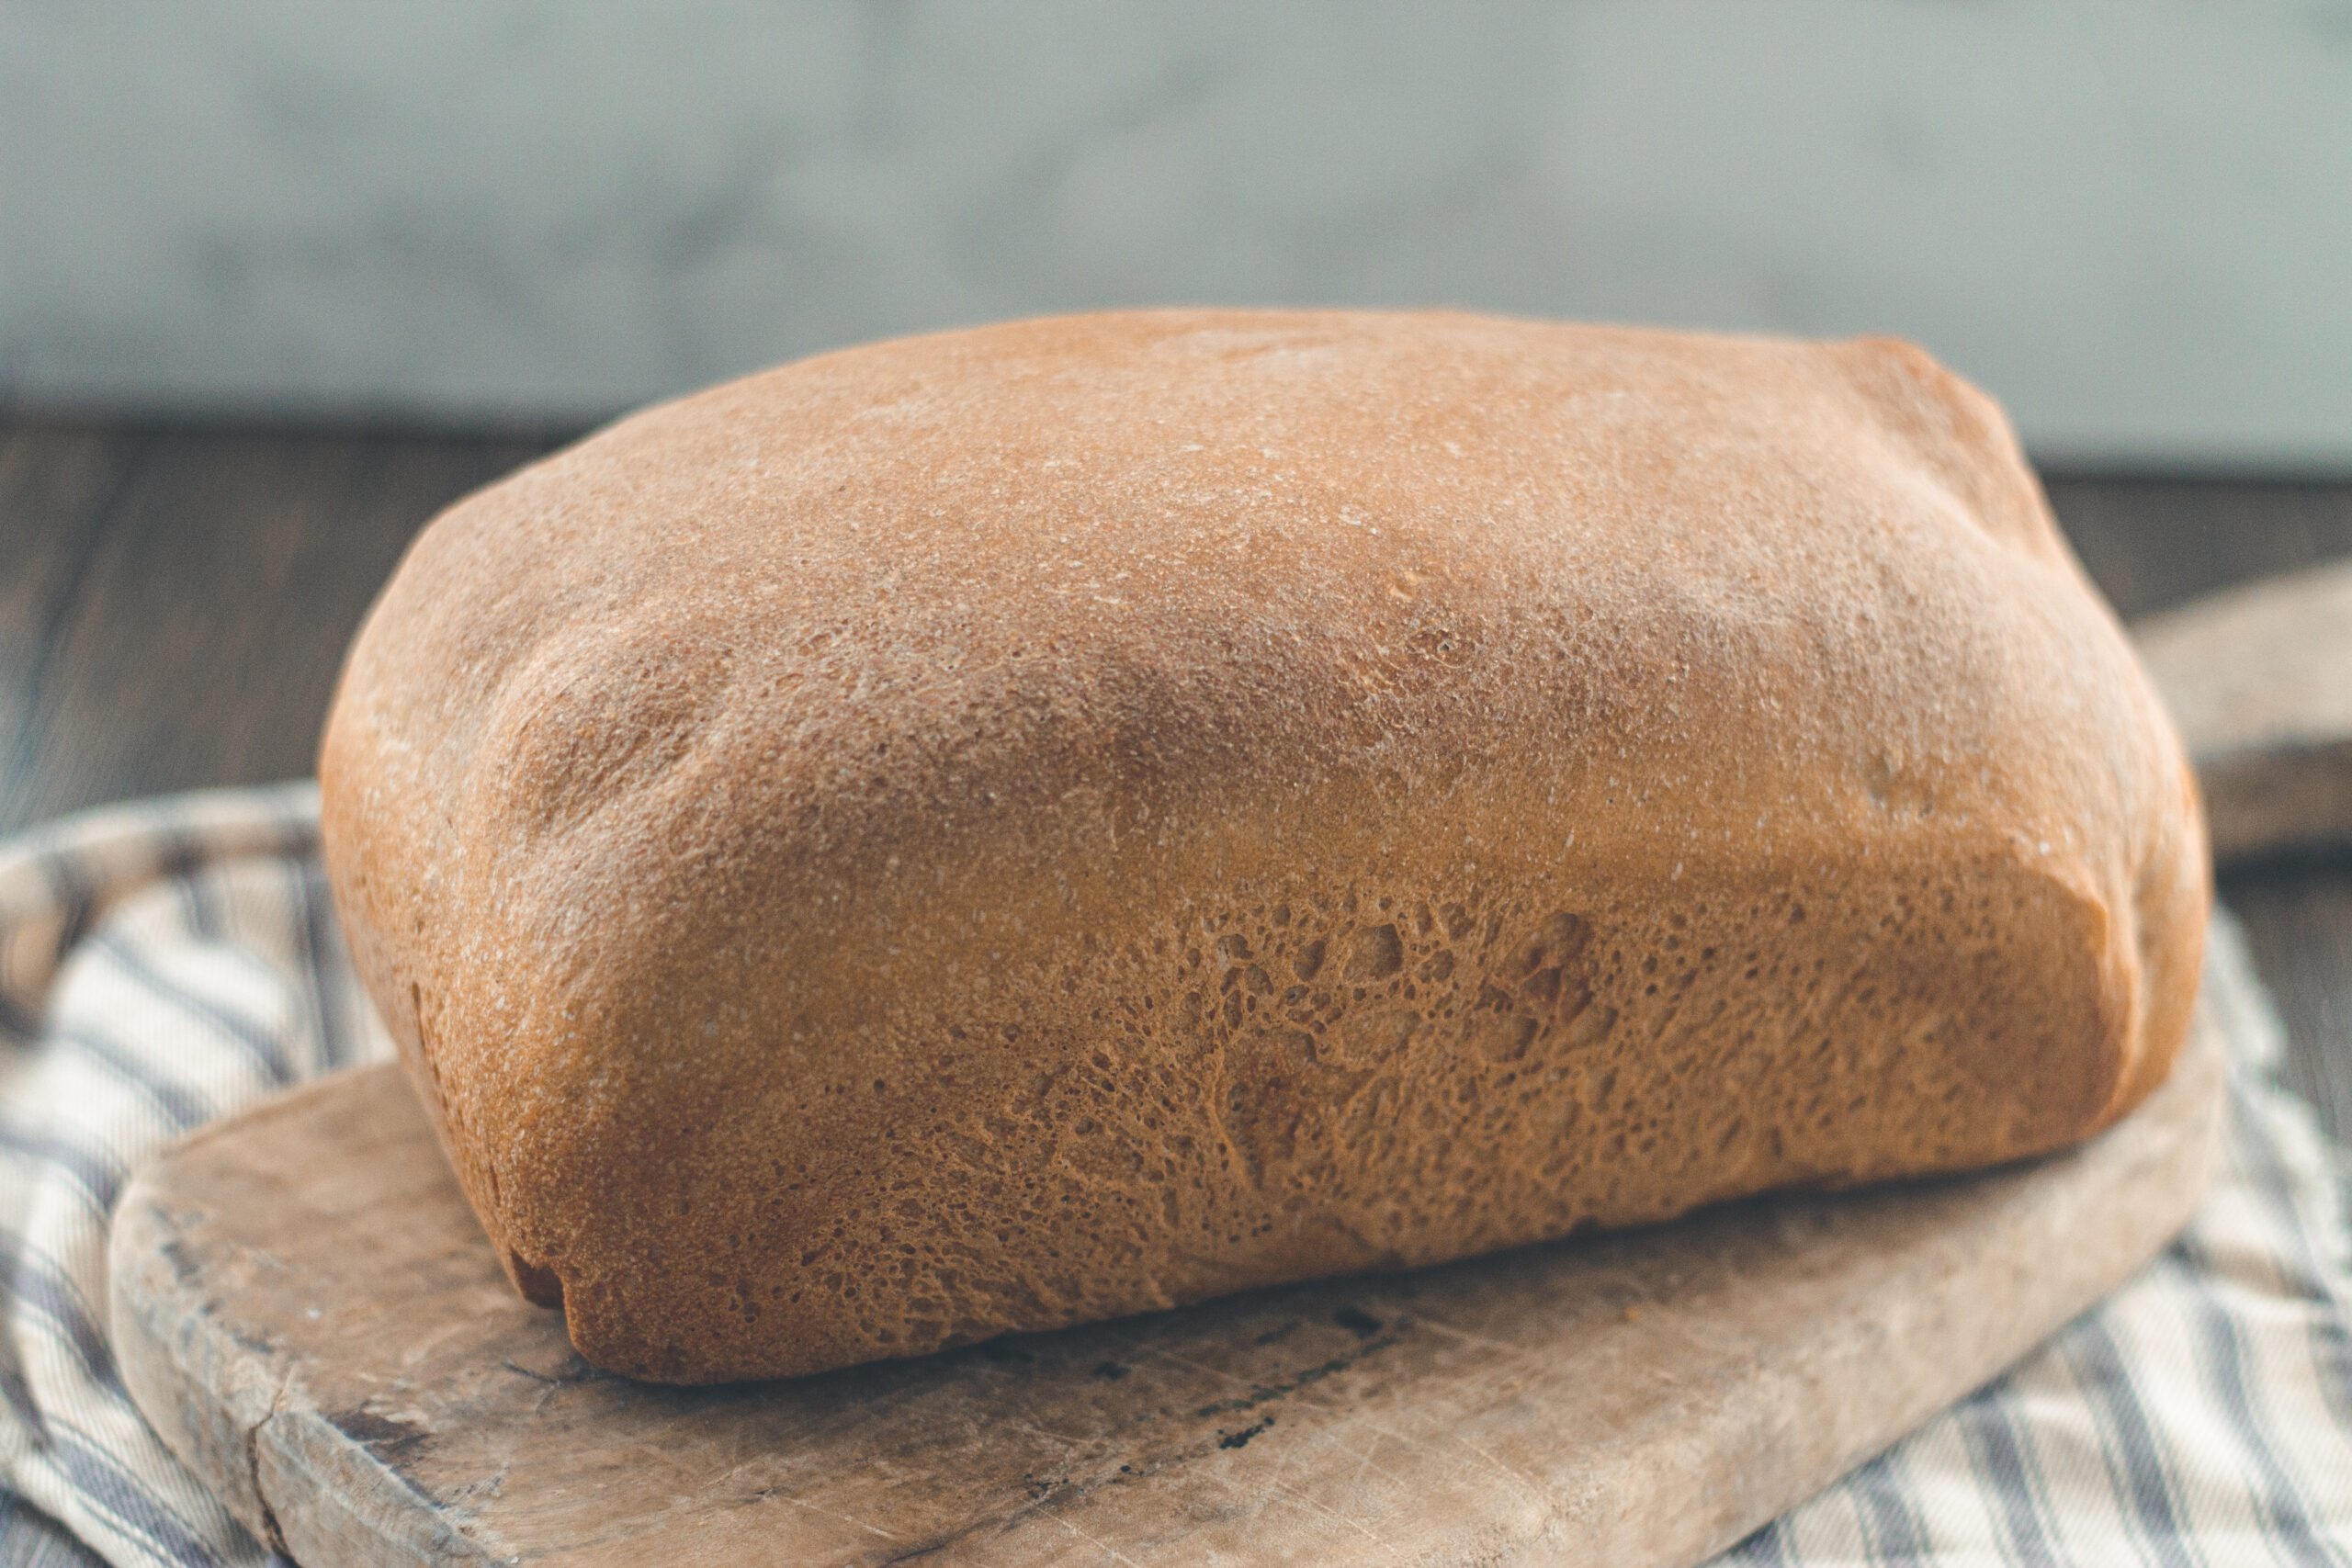 A loaf of Barley Bread